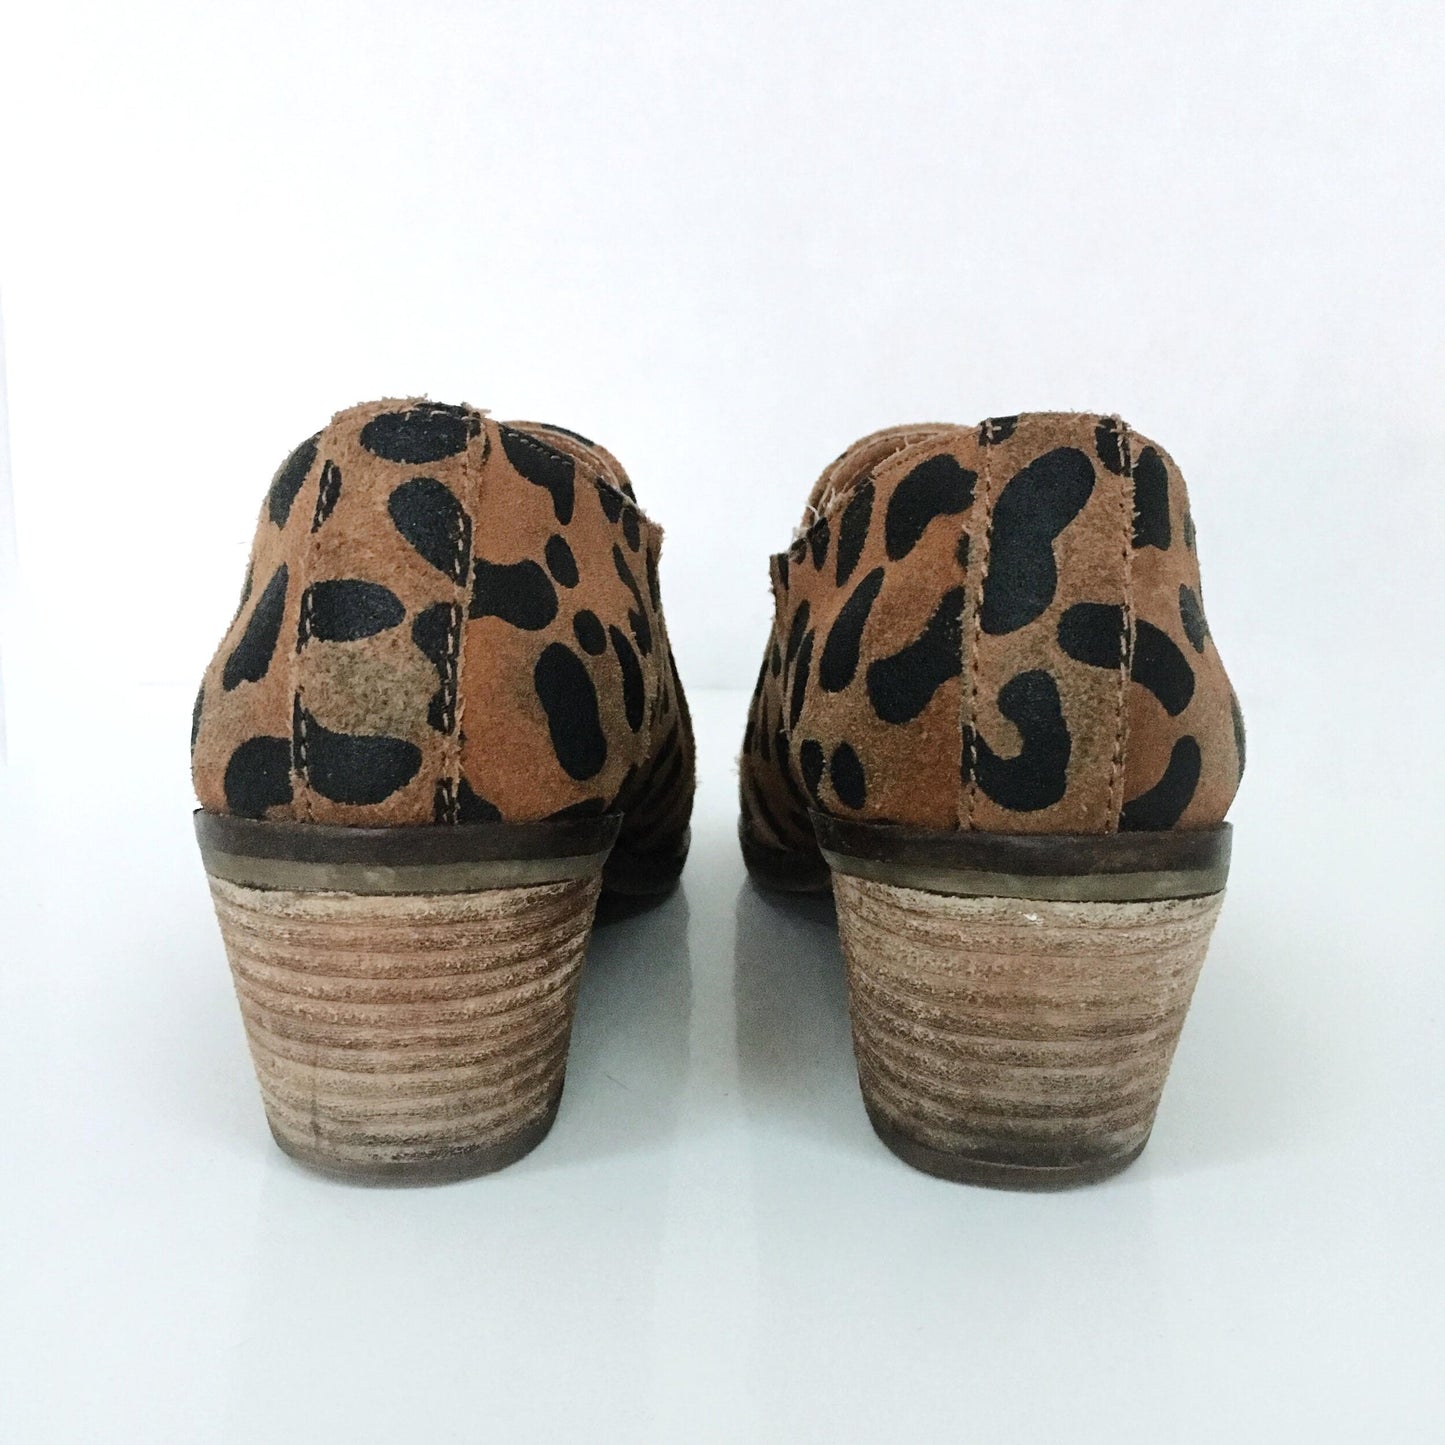 Dolce Vita Leopard Slip-on Booties - size 6